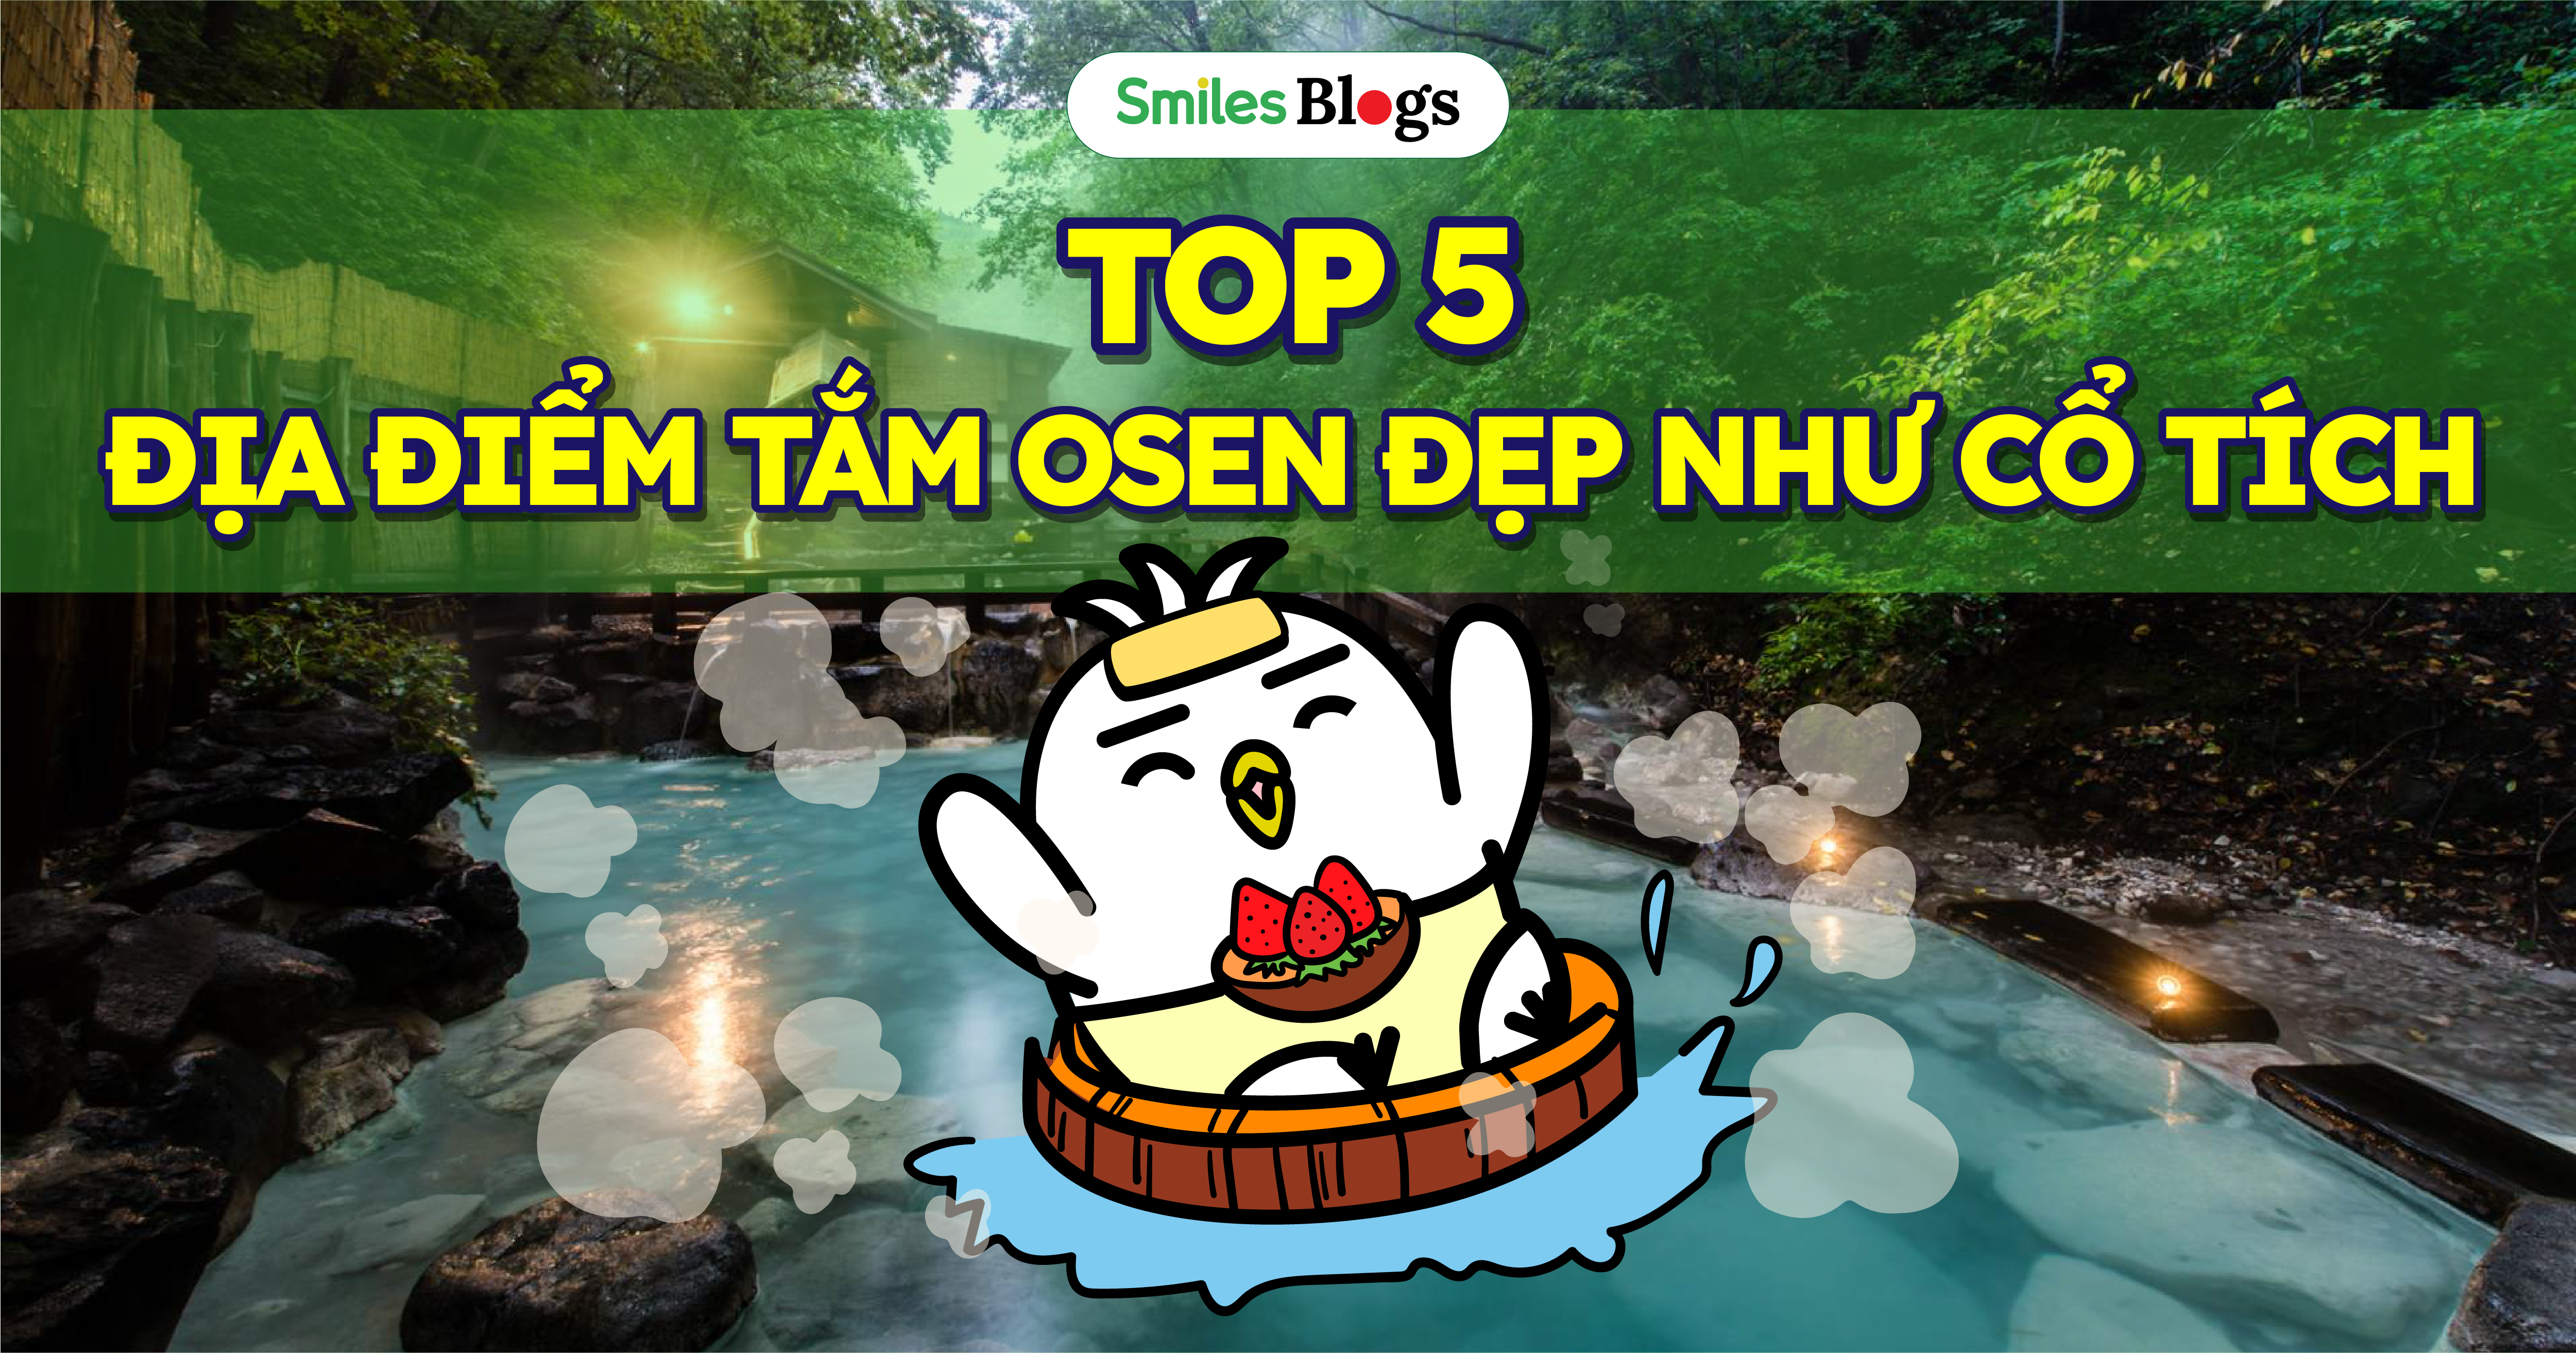 top-5-dia-diem-tam-onsen-o-nhat-ban-dep-nhu-co-tich